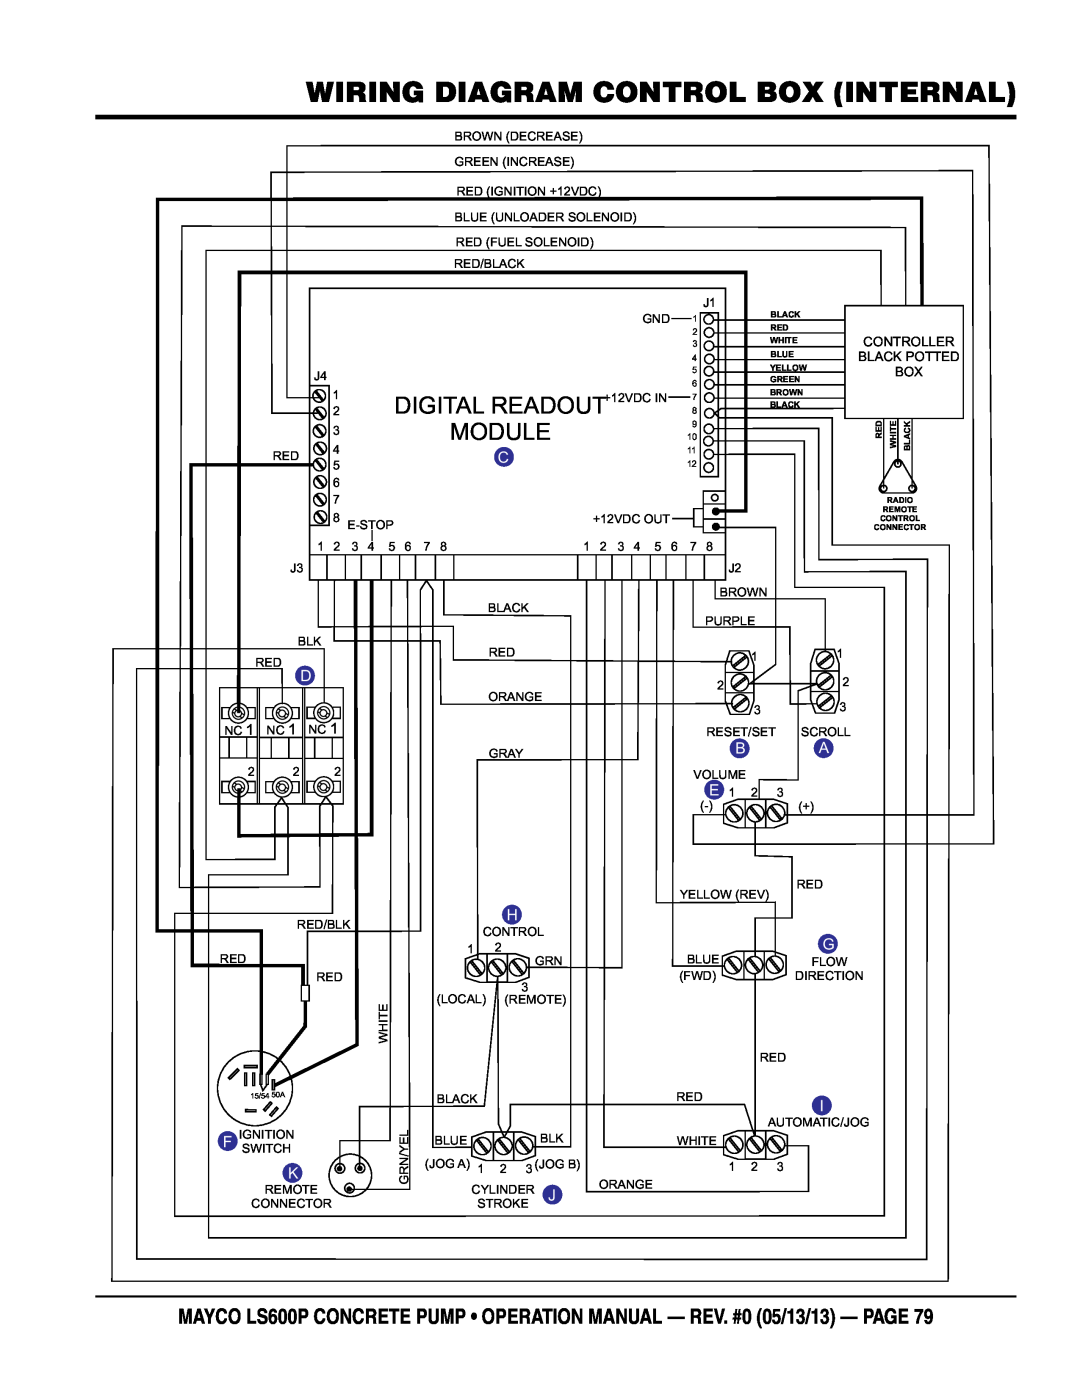 Multiquip LS600P operation manual wiring diagram control box INTERNAL, Module, Digital Readout 